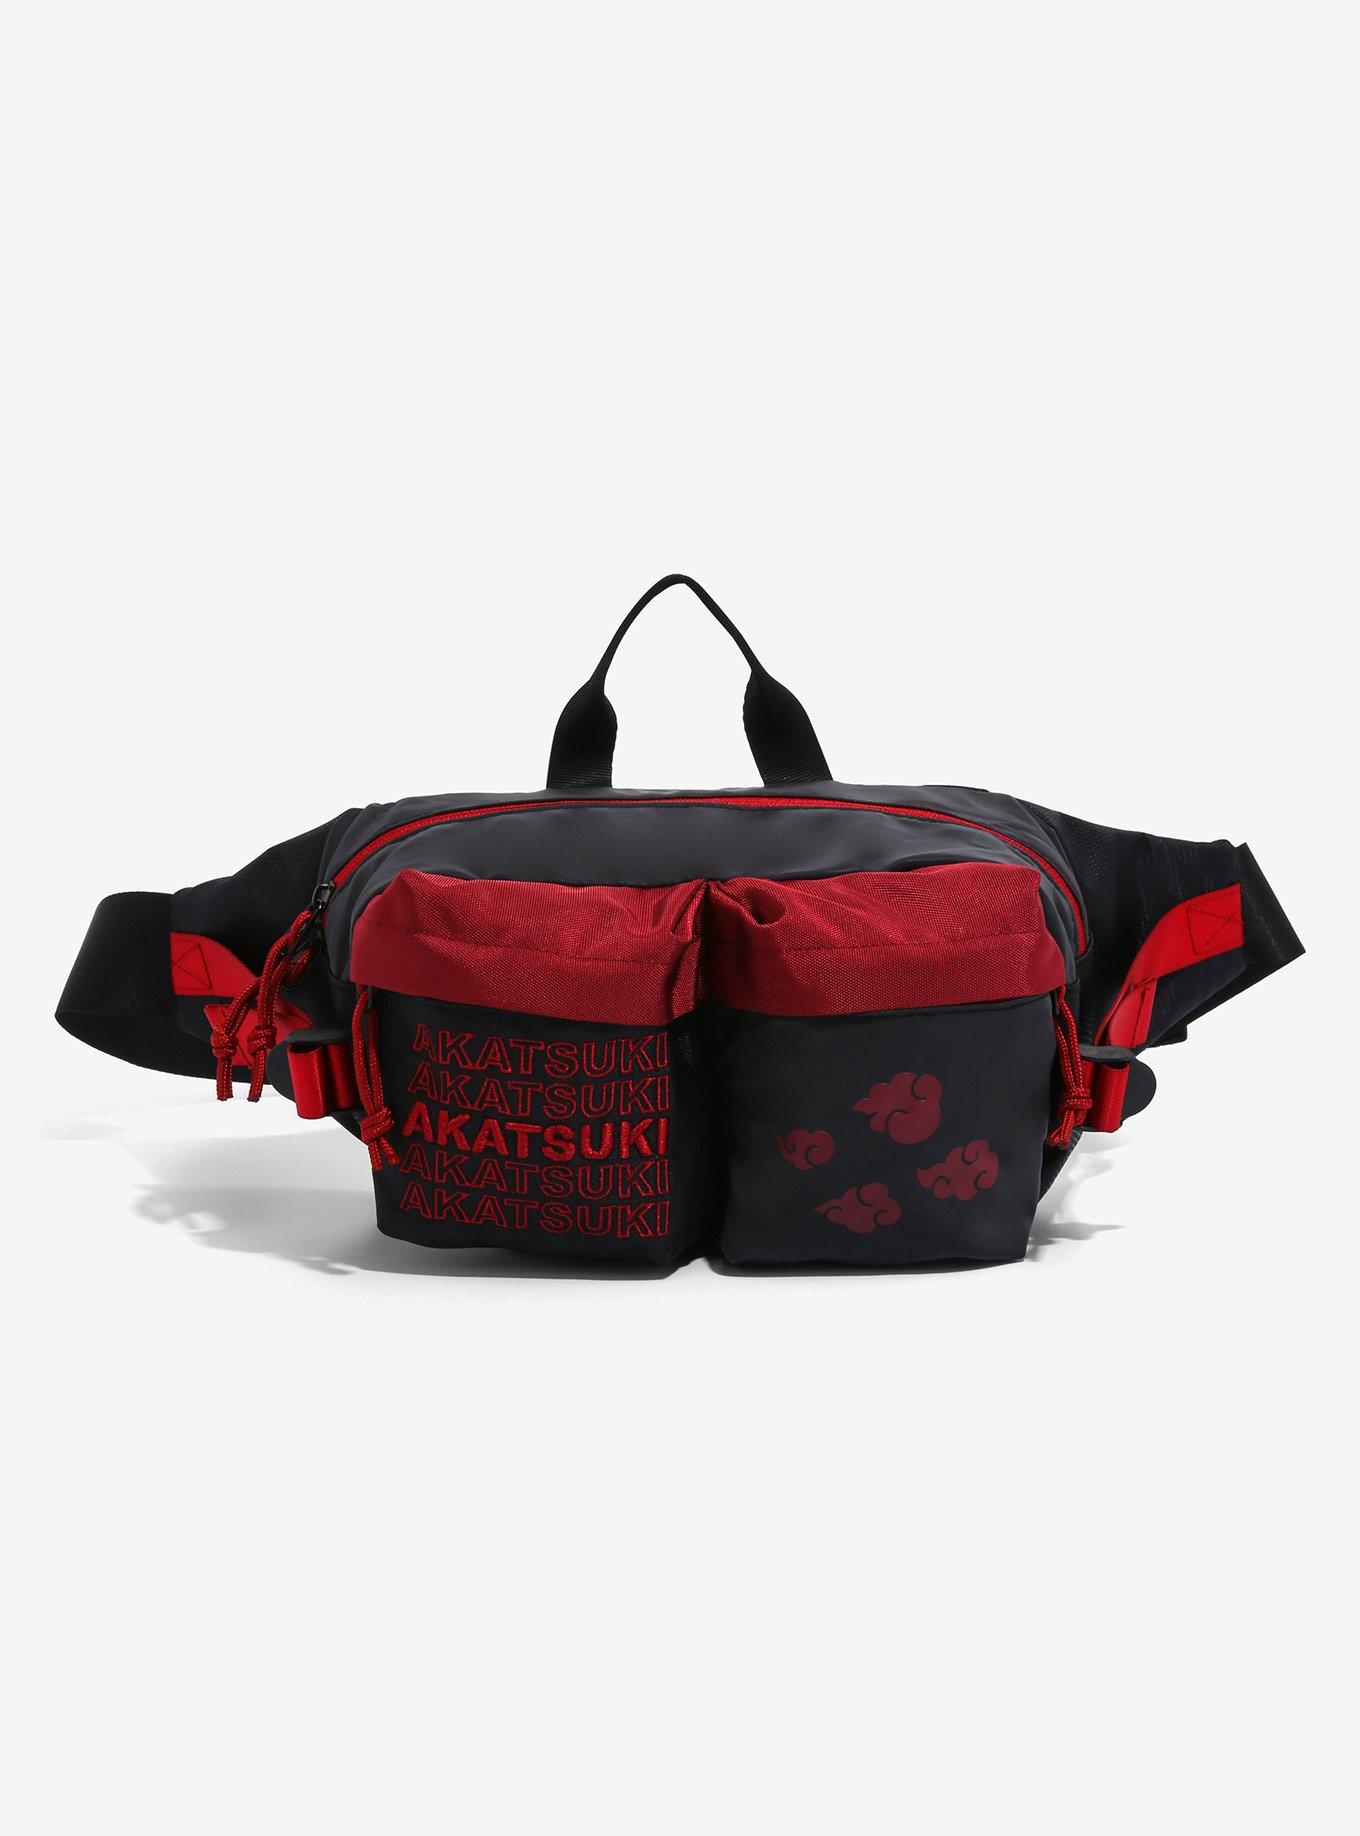 Naruto Shippuden Akatsuki Cloud Built-Up Backpack - BoxLunch Exclusive